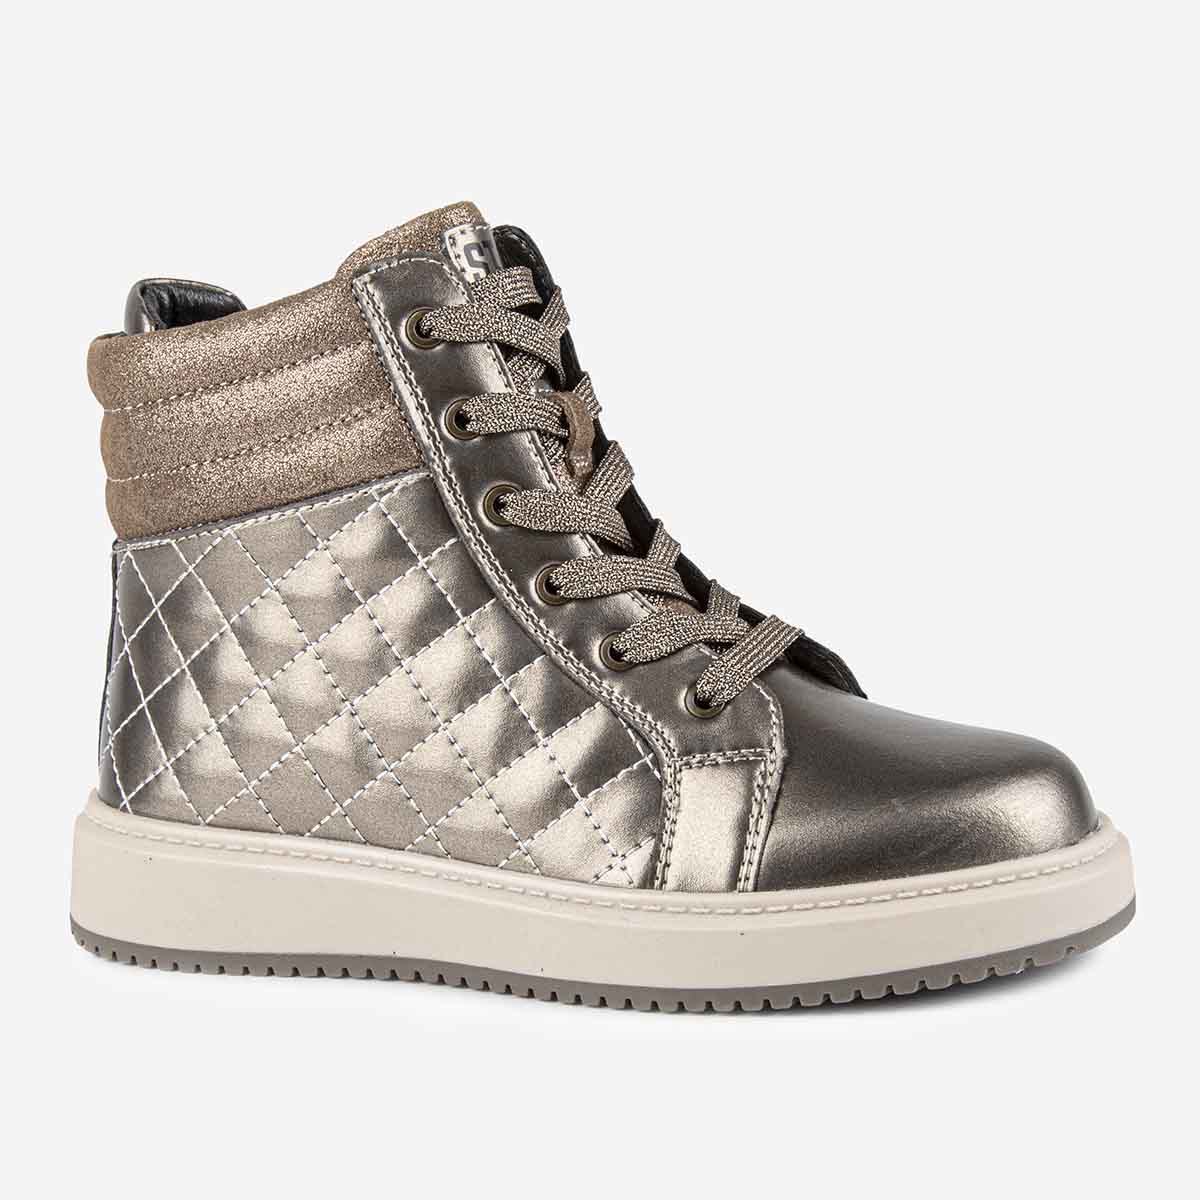 Ботинки Kapika 53638ук, цвет бронзовый, размер 30 сандалии geox j sandal soleima gir для девочек j35gsb бронзовый 26р